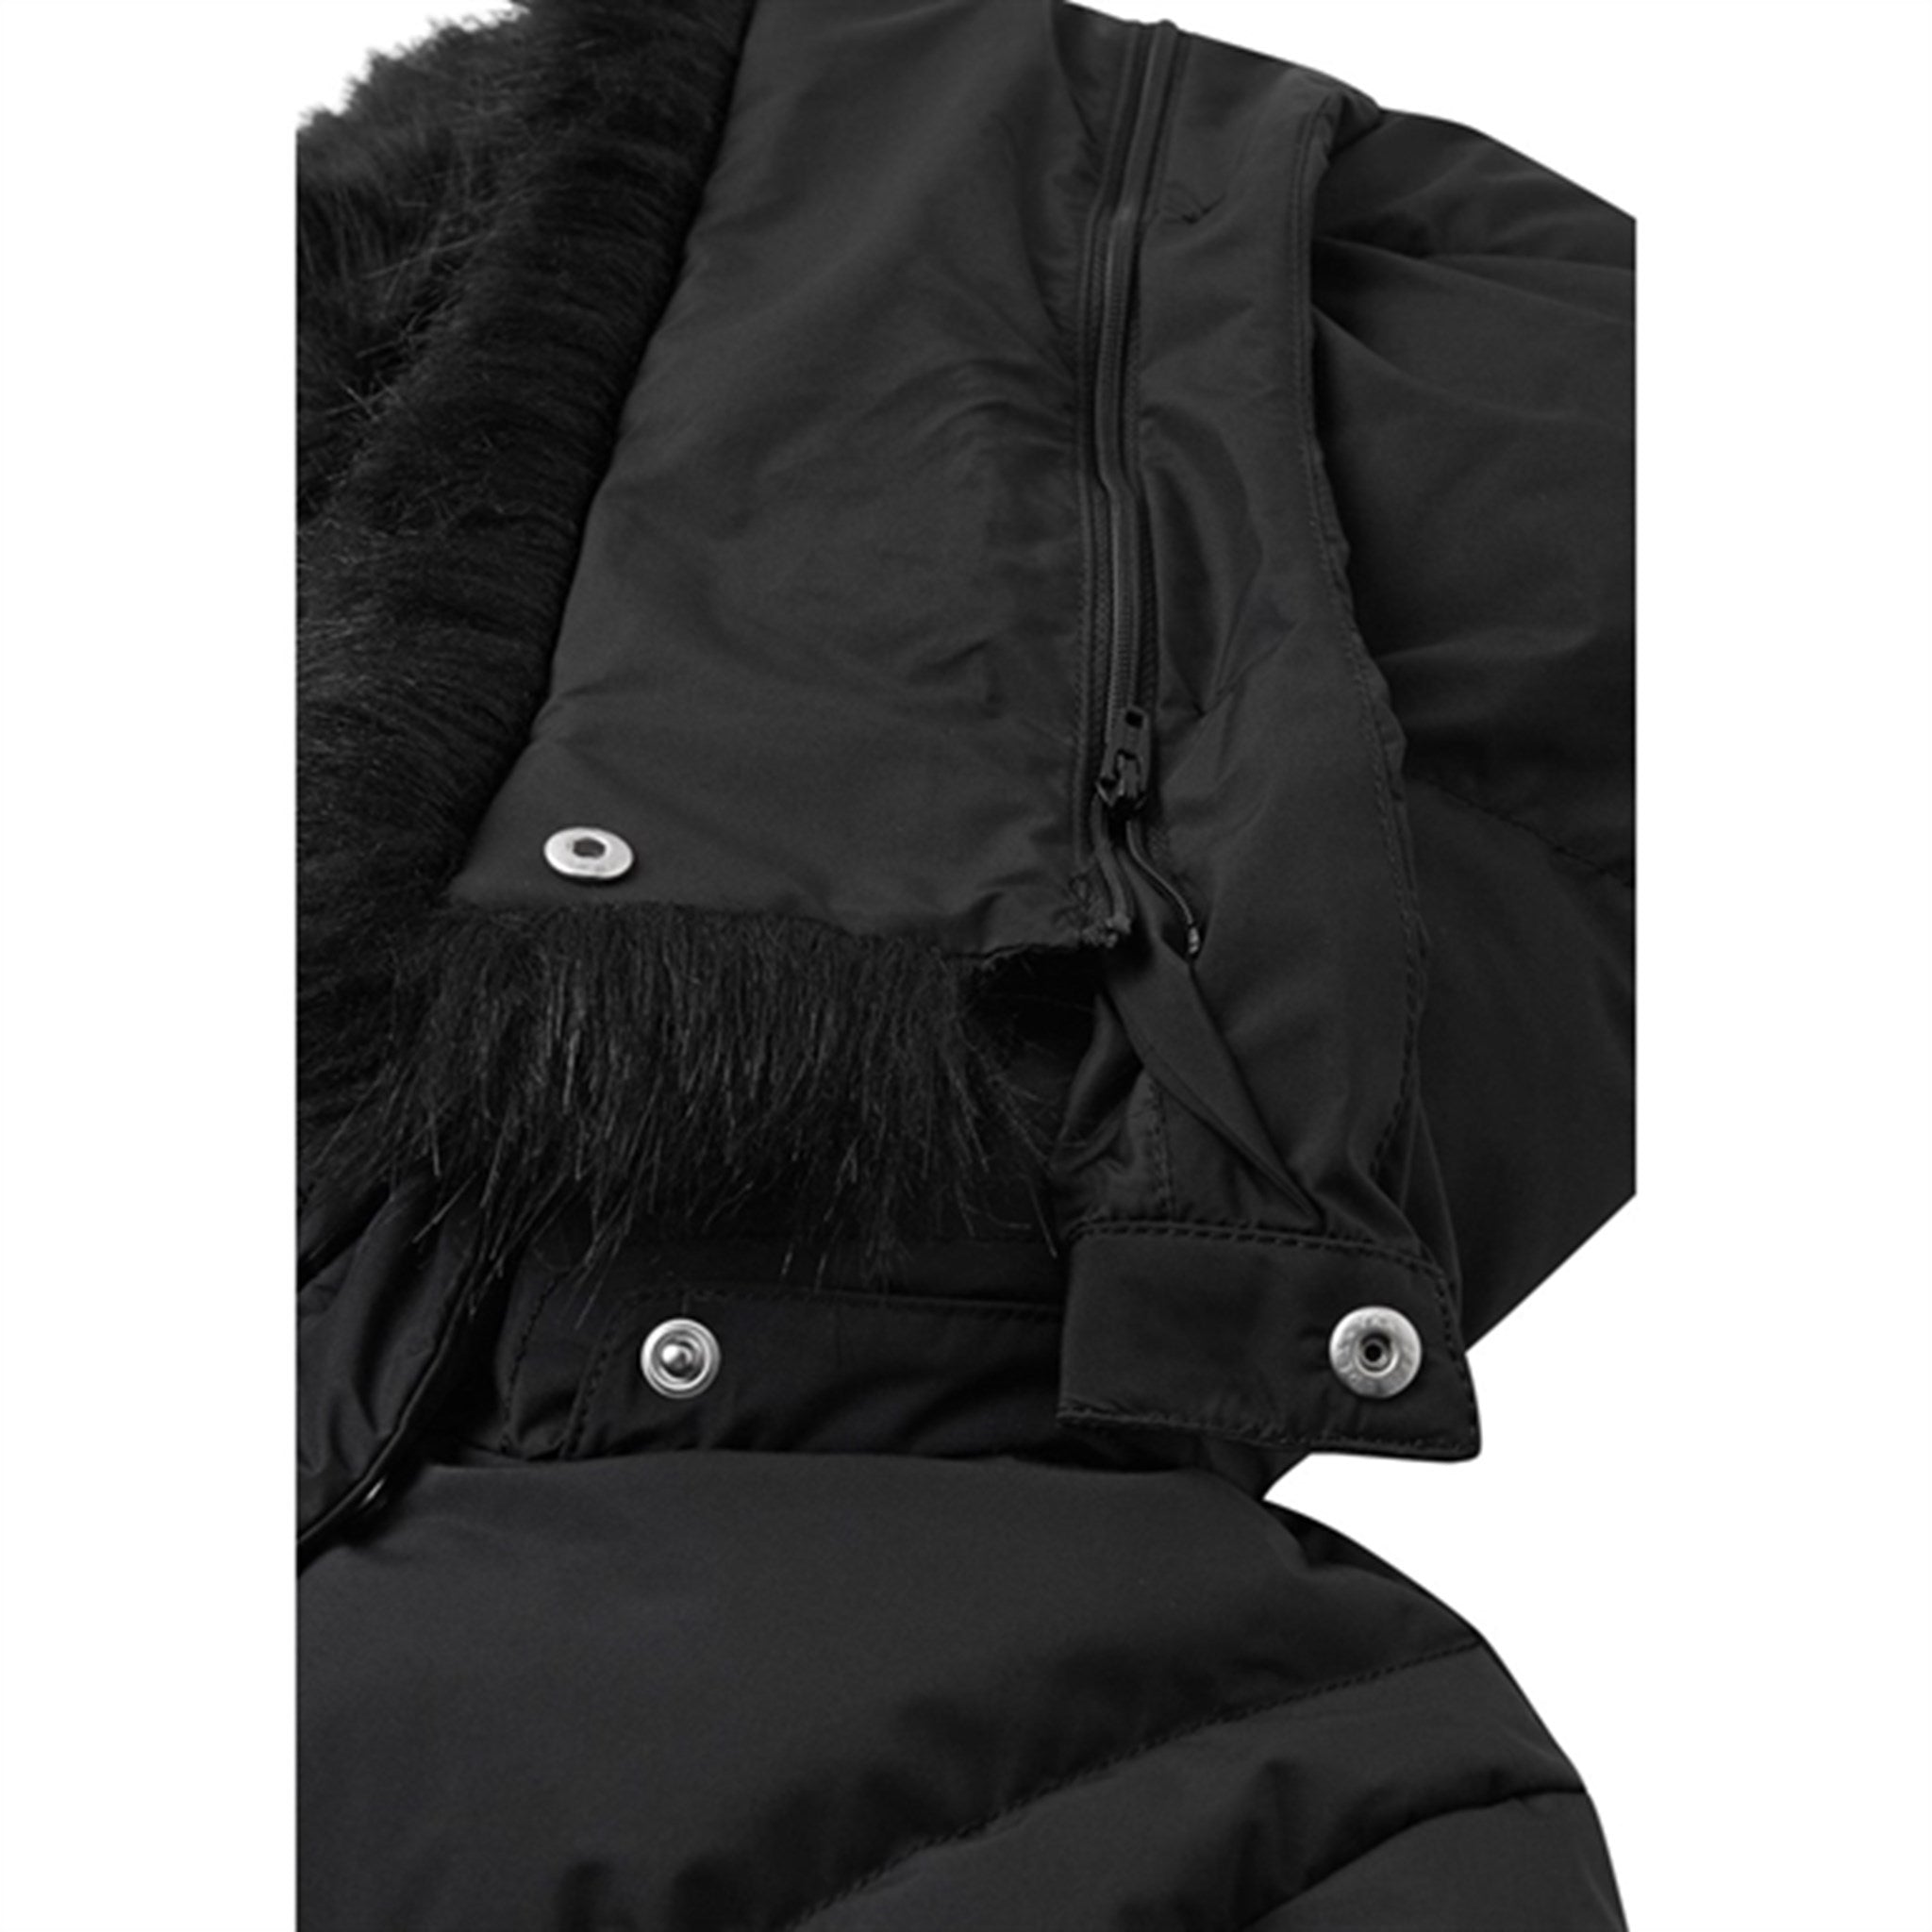 Reima Winter Jacket Siemaus Black 8